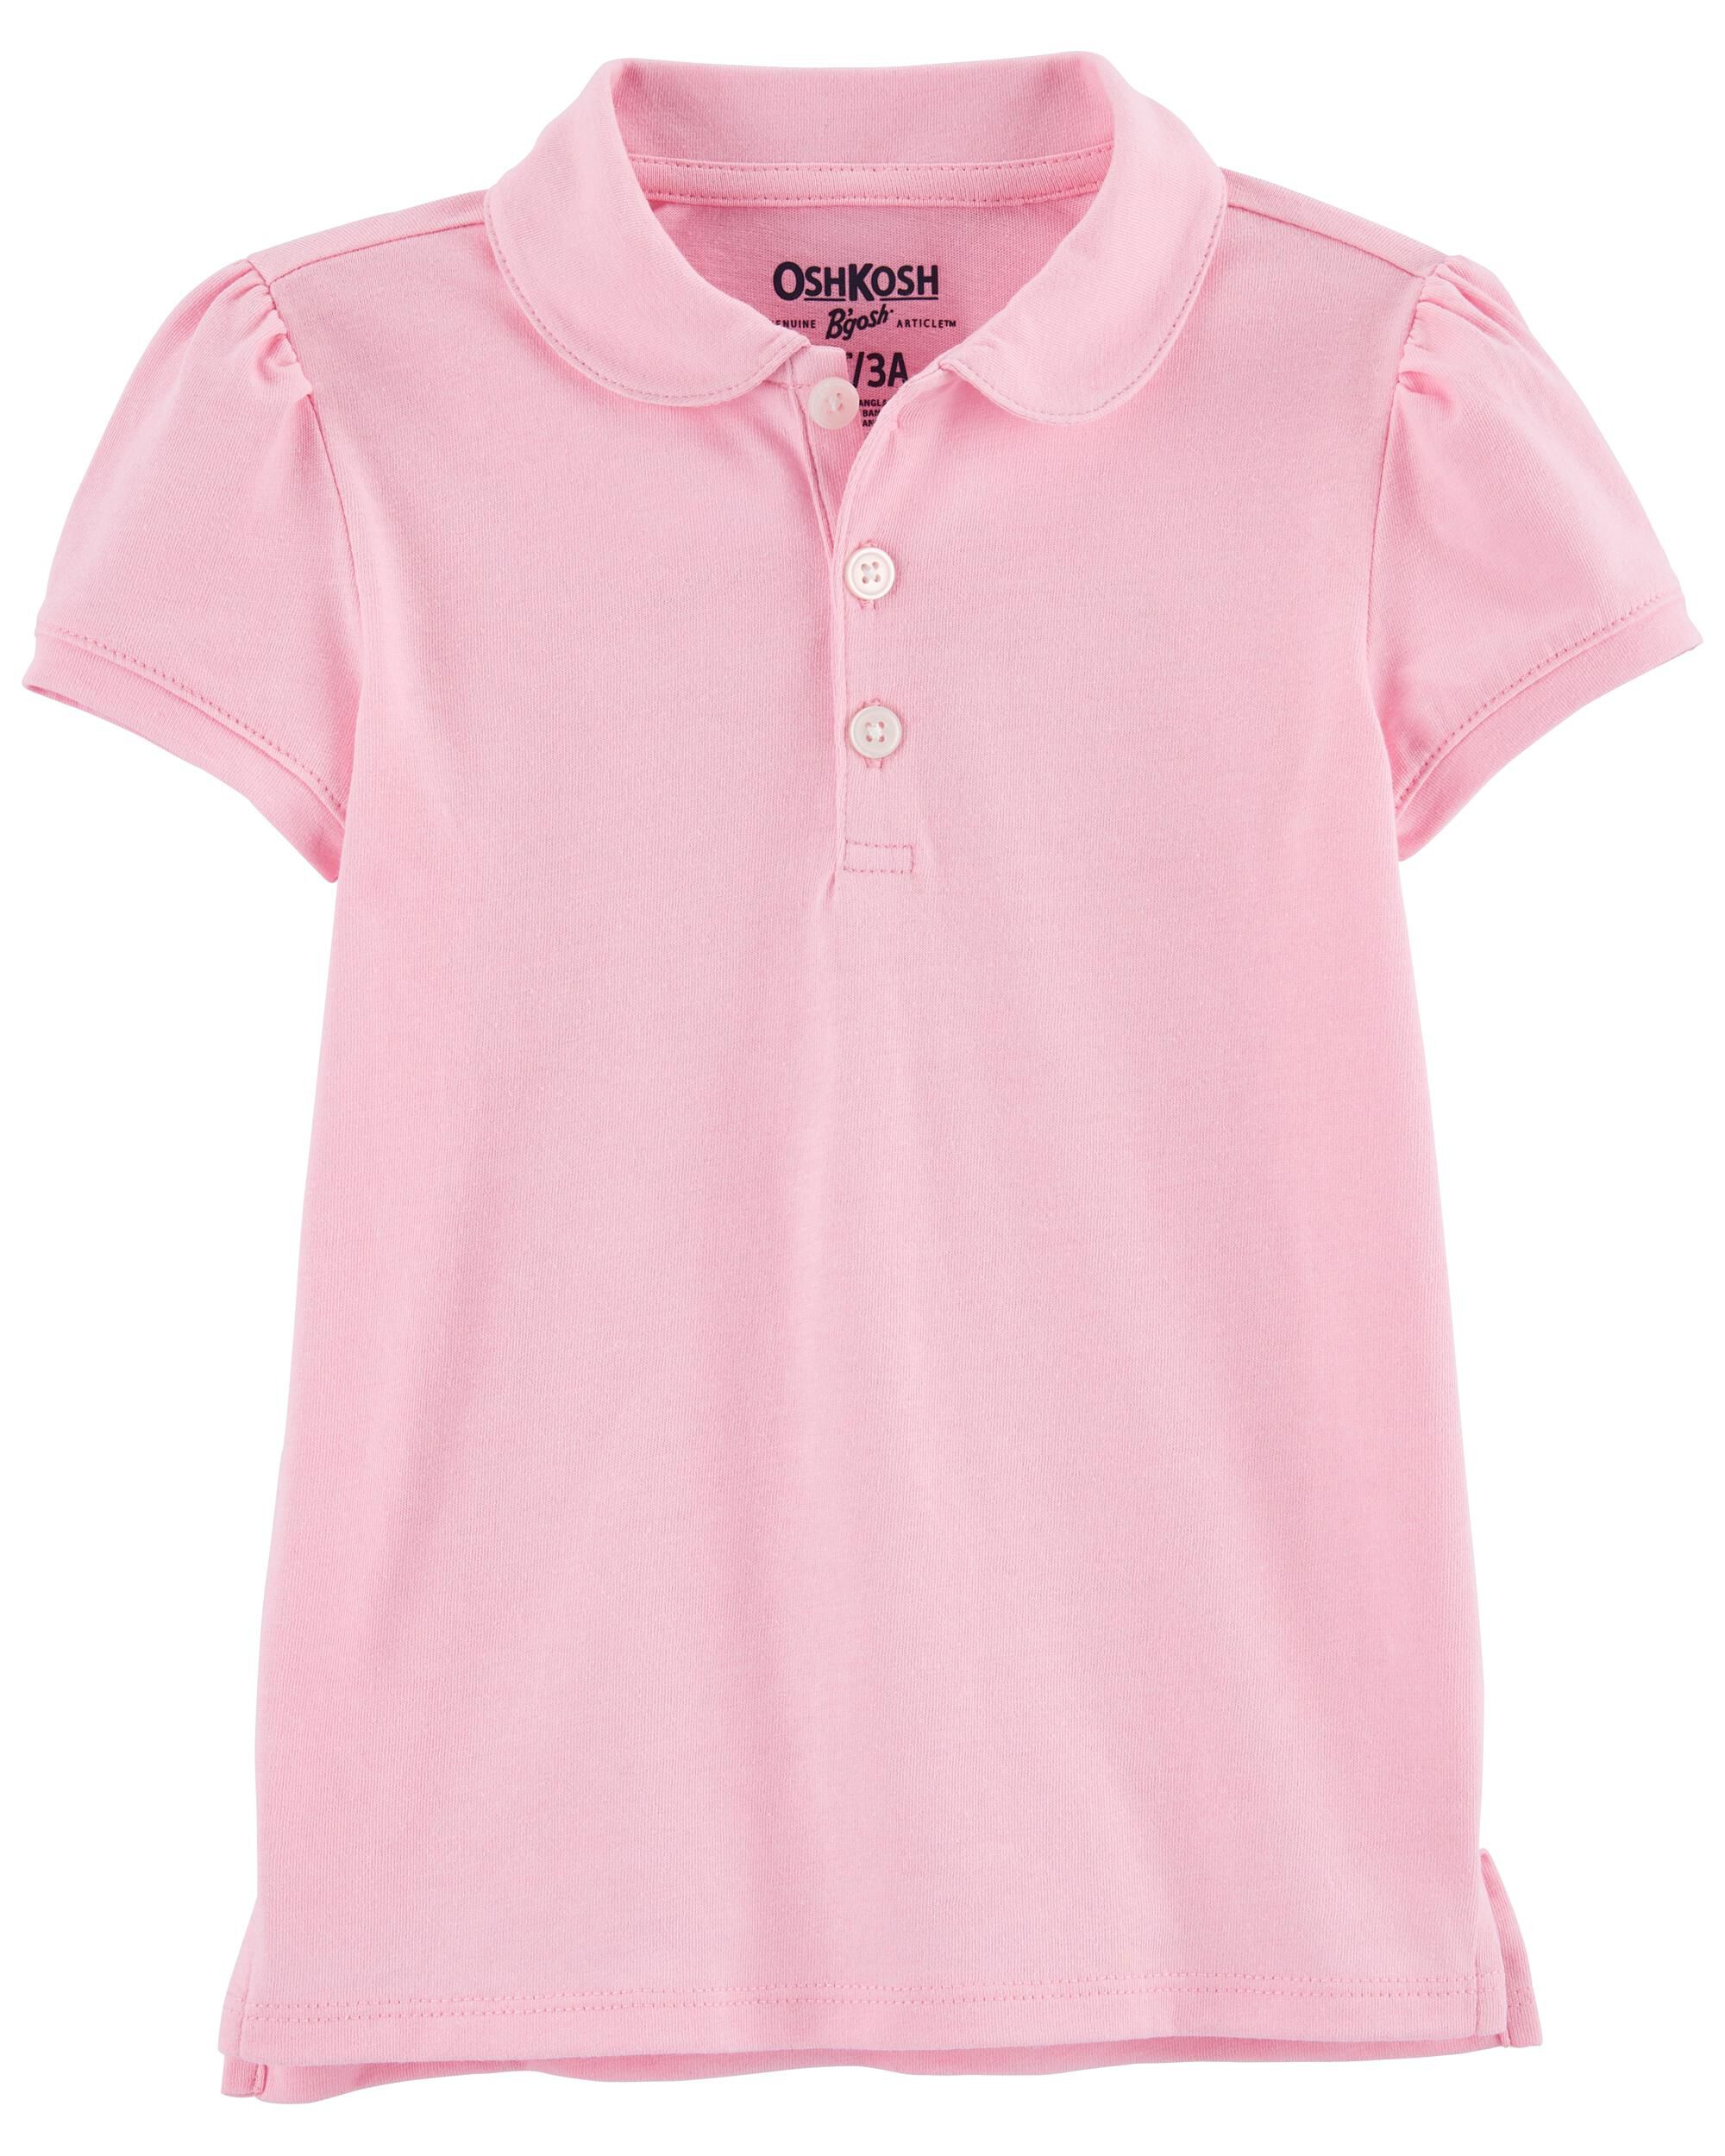 New Girl's Top Shirt NWT Toddler Kids Size 12m 3T 4T 5T Purple Pink OshKosh 